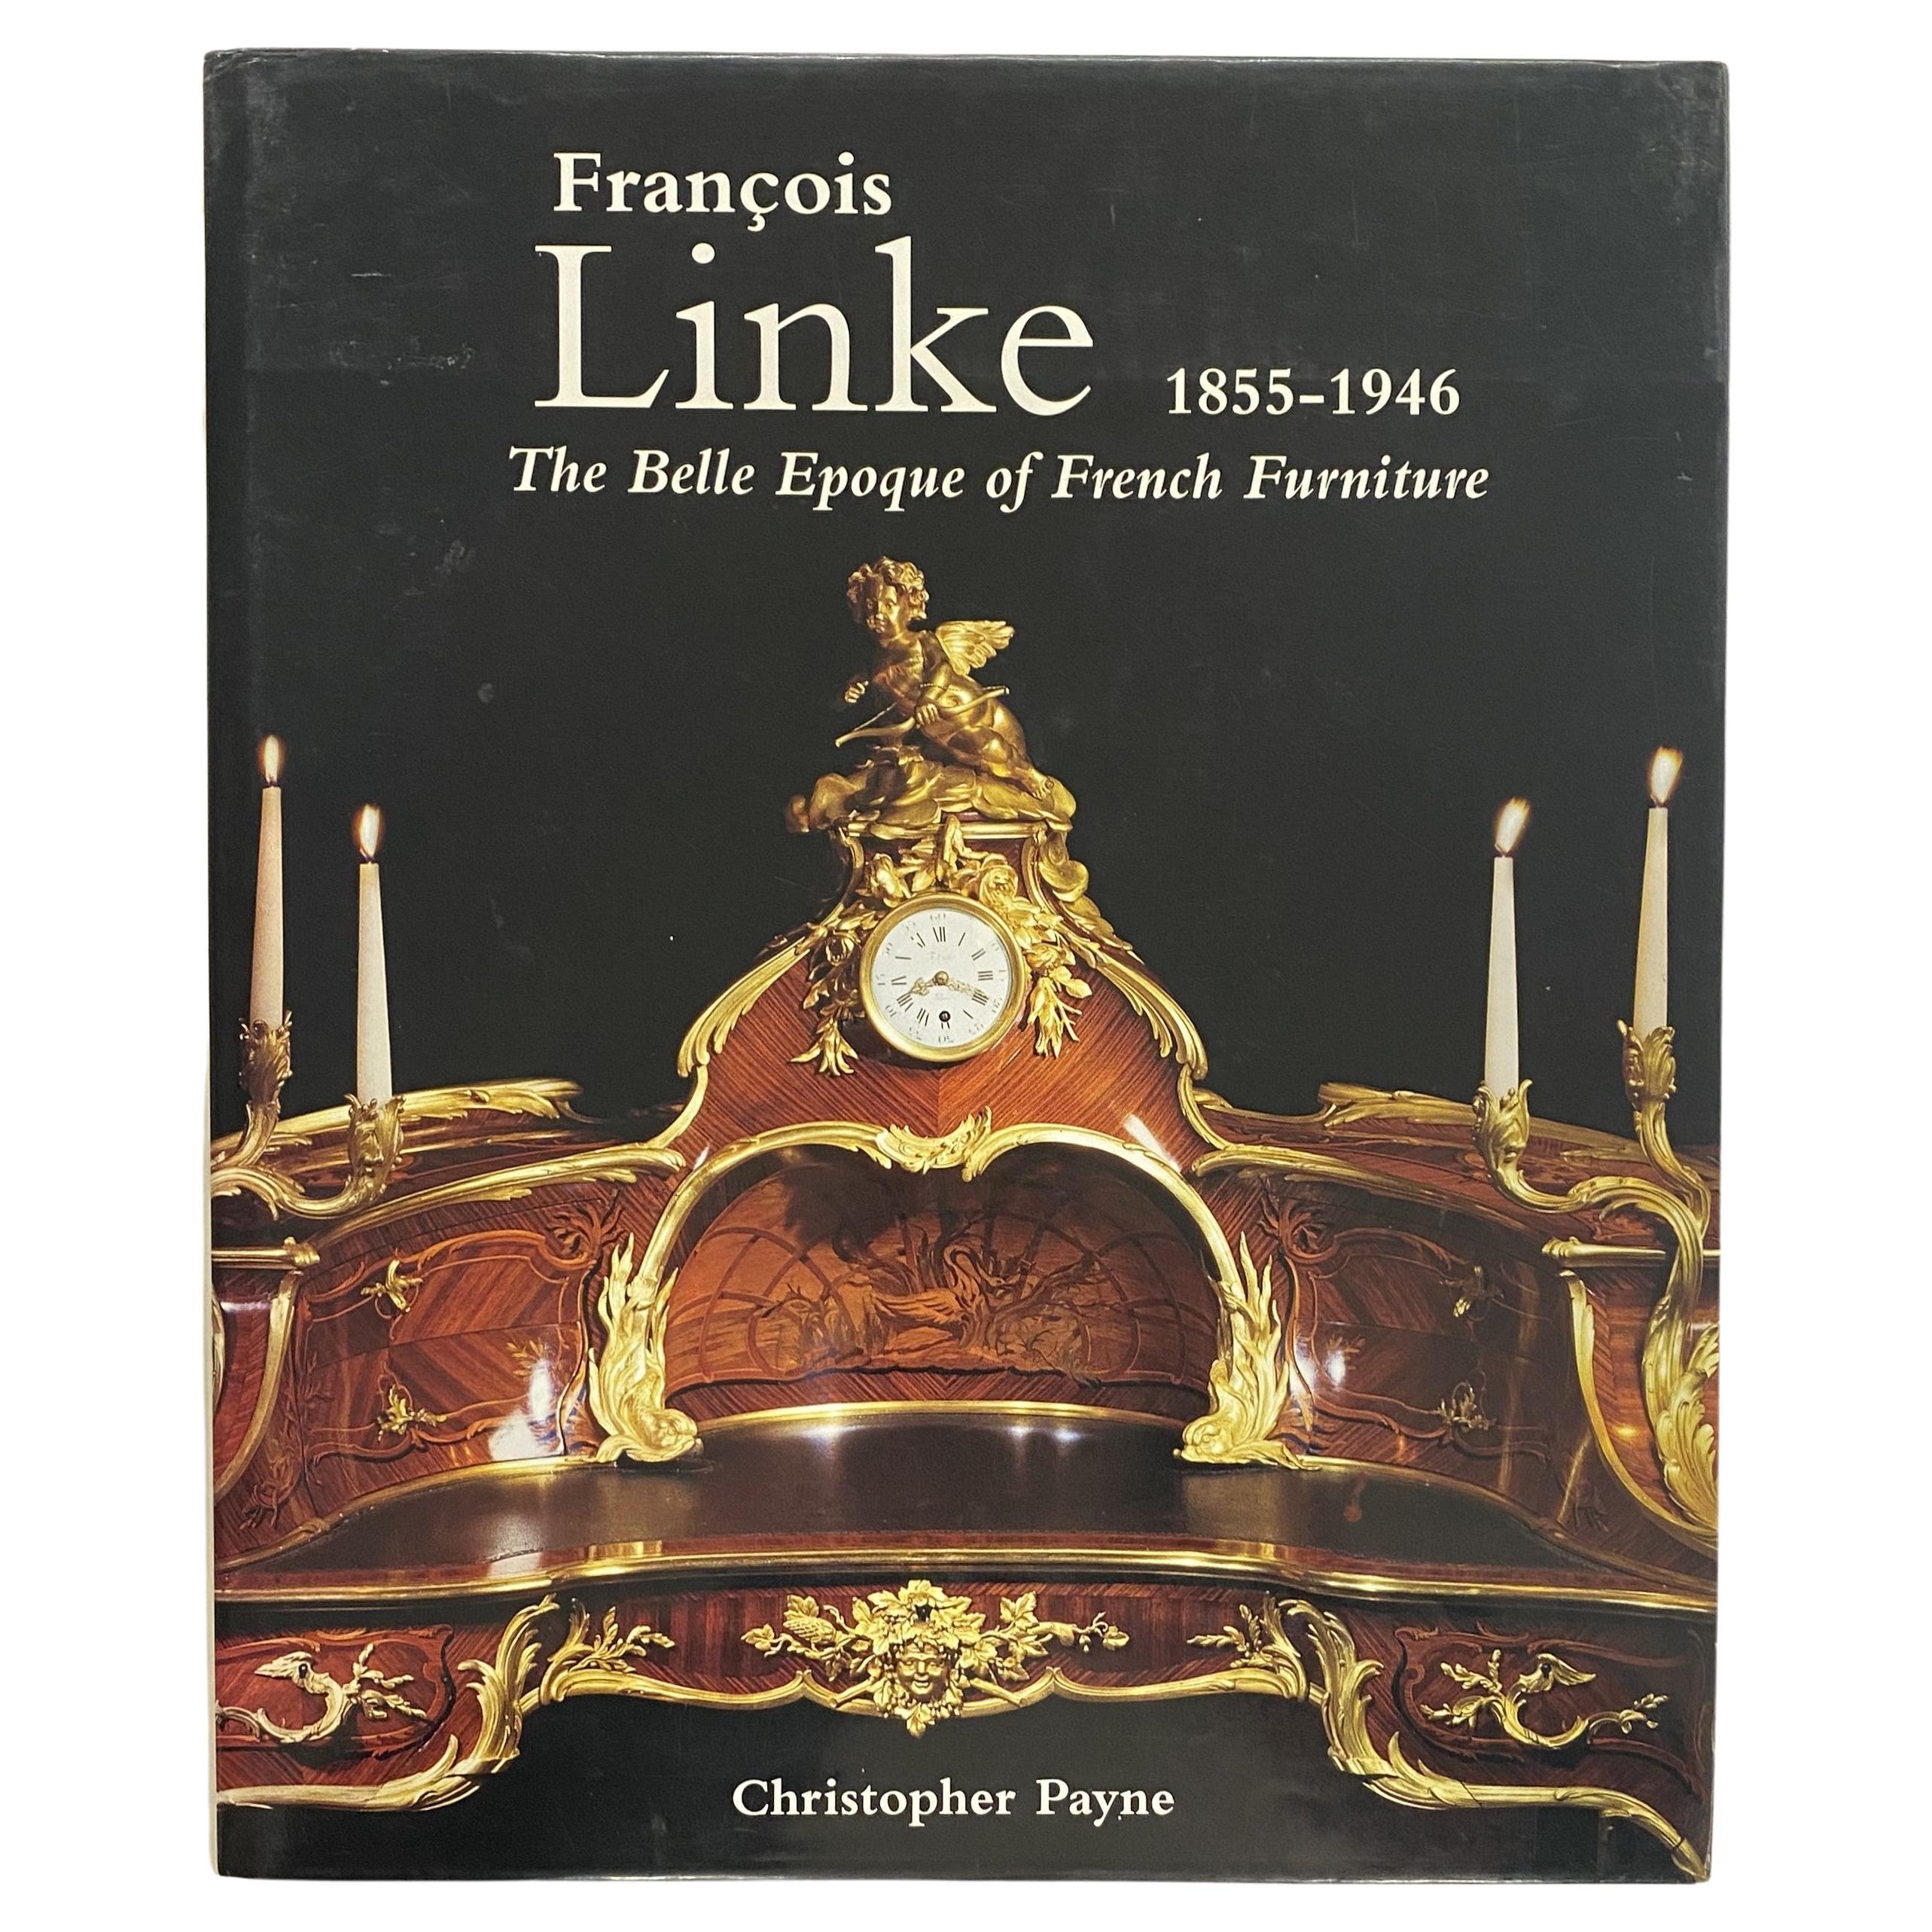 Francois A Link 1855-1946, the Belle Epoque of French Furniture par C.C. (Livre)